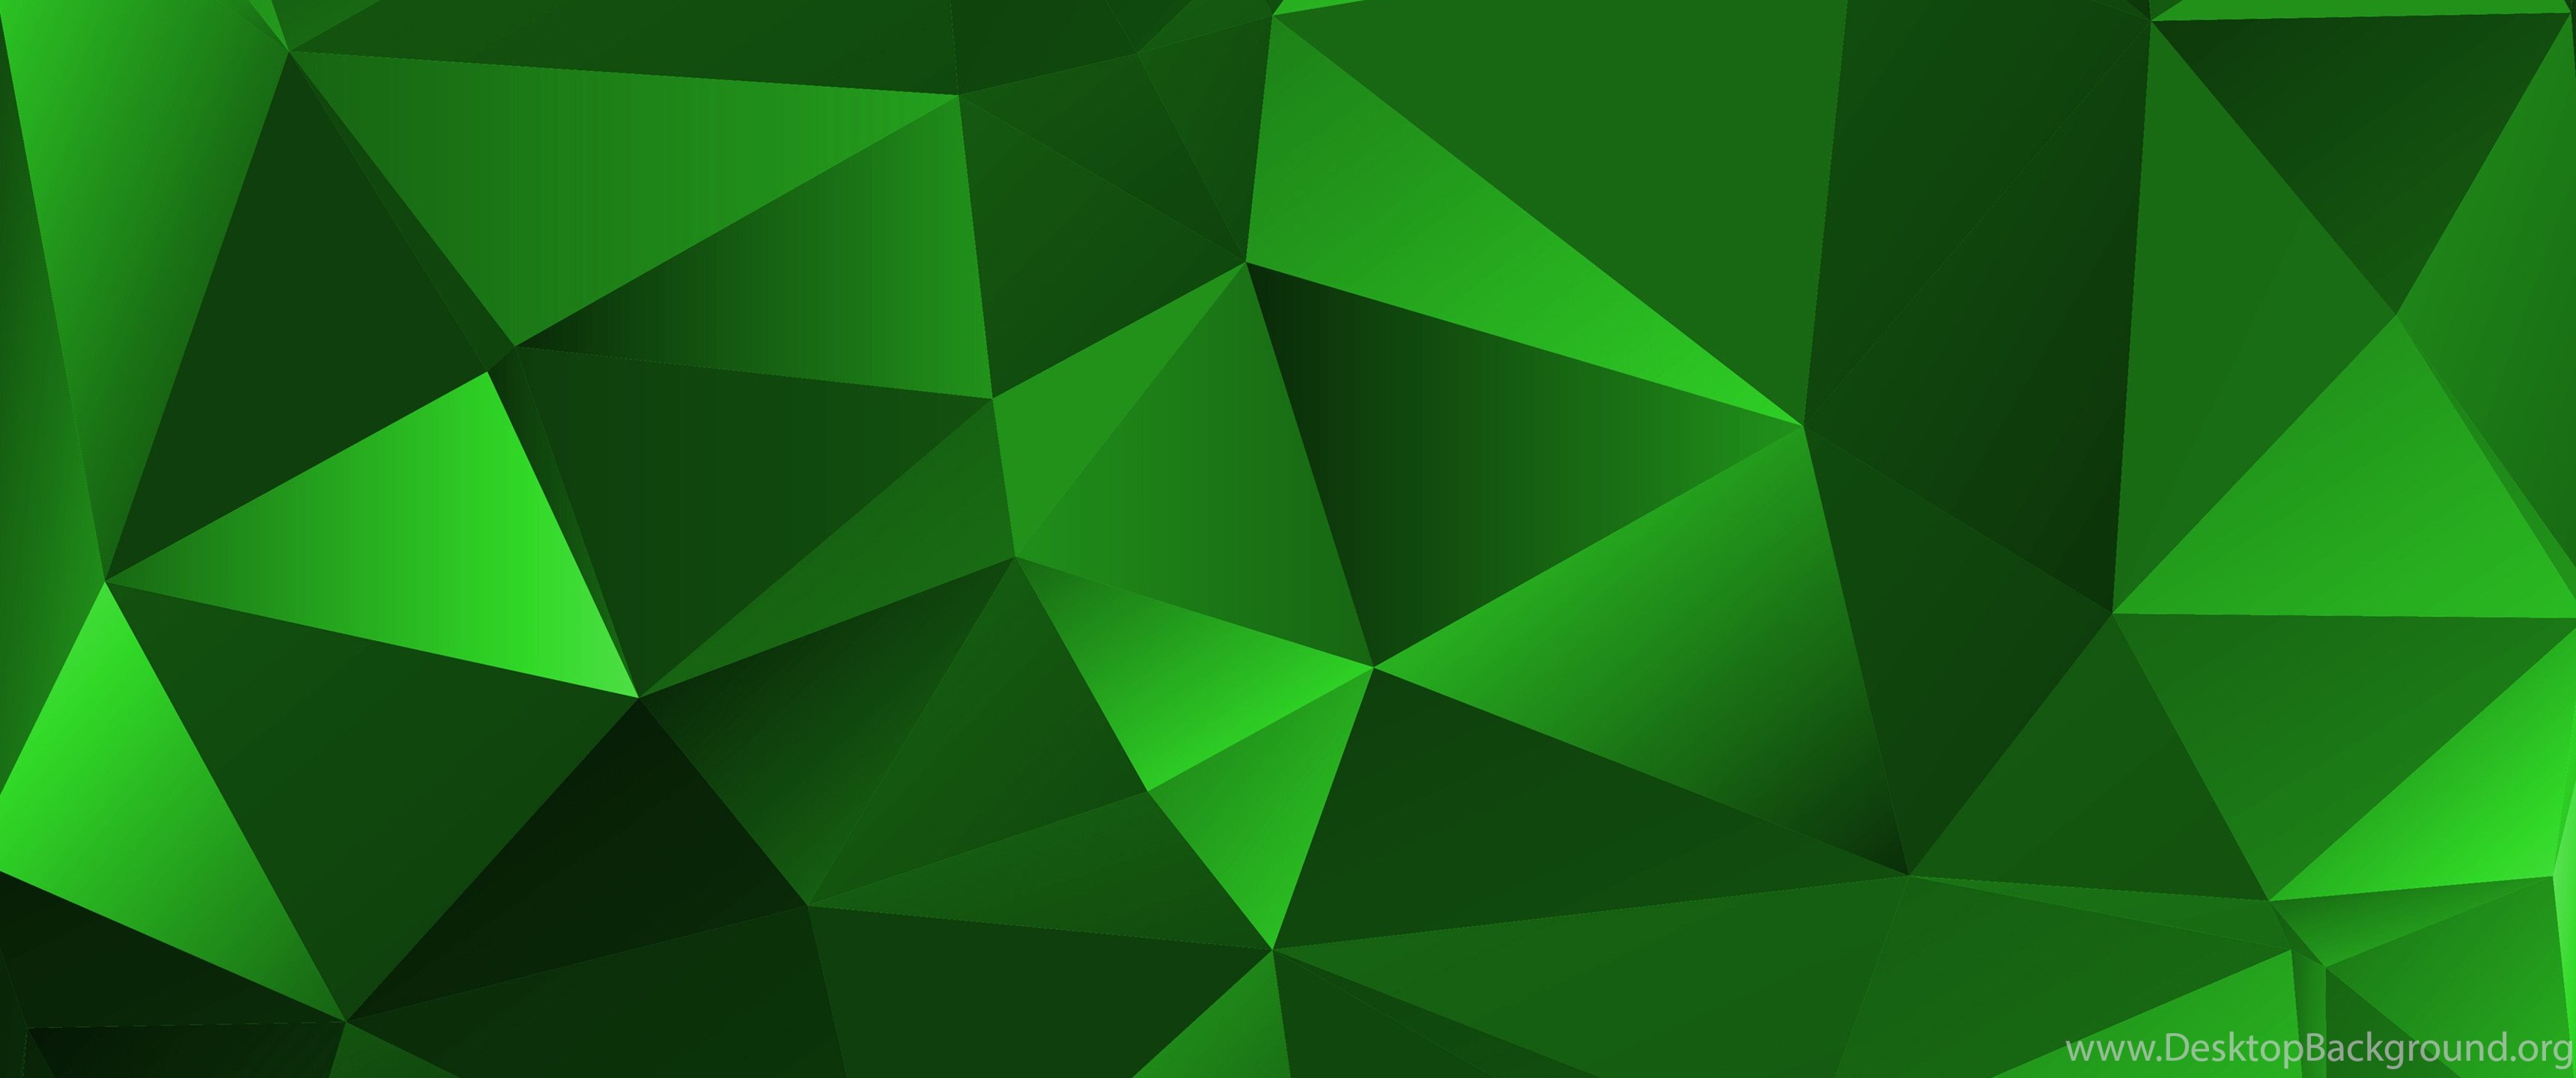 Green Polygon Background Texturezine Desktop Background